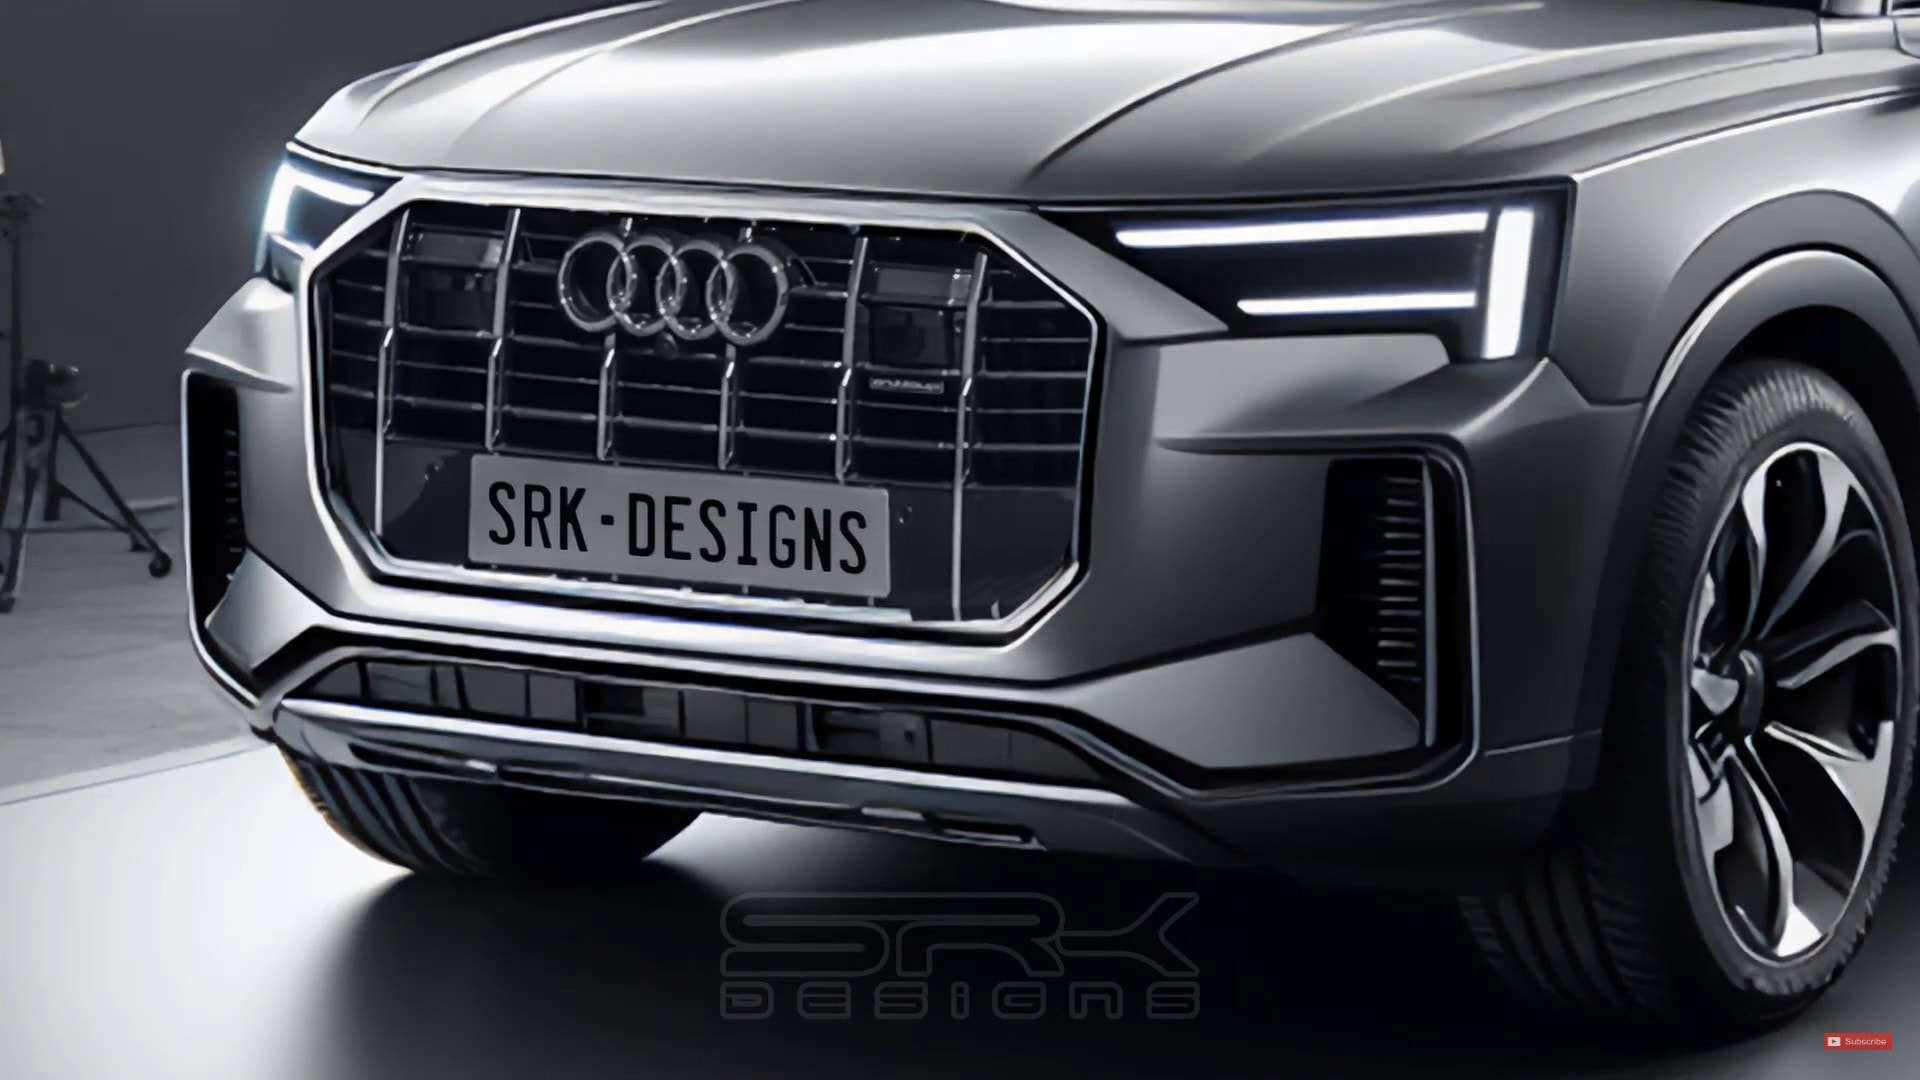 Audi's Renaissance Revamped Designs, New Challenges